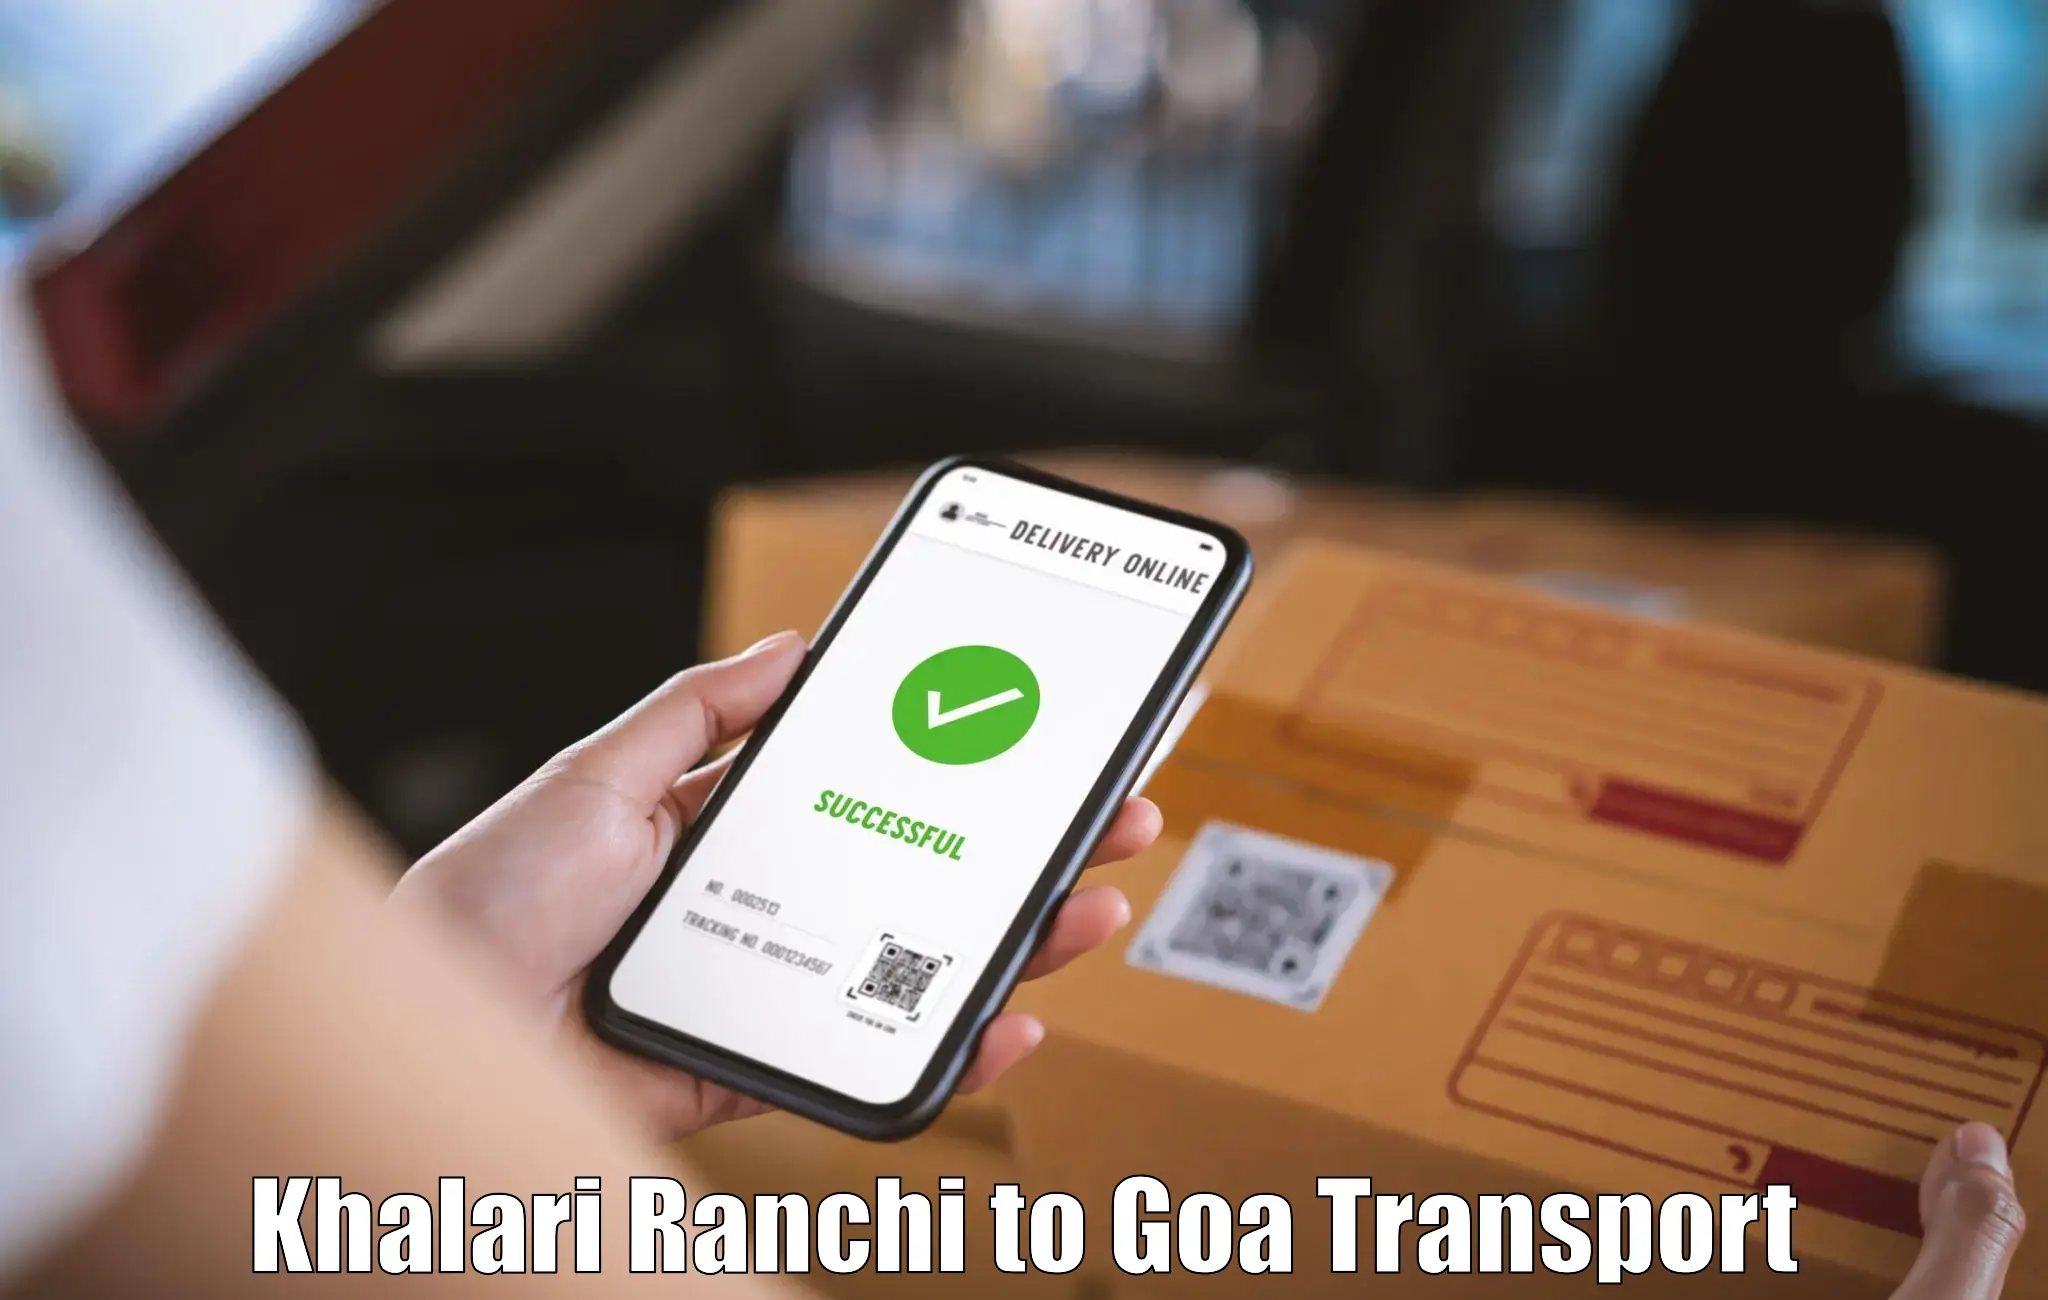 Pick up transport service Khalari Ranchi to Panaji